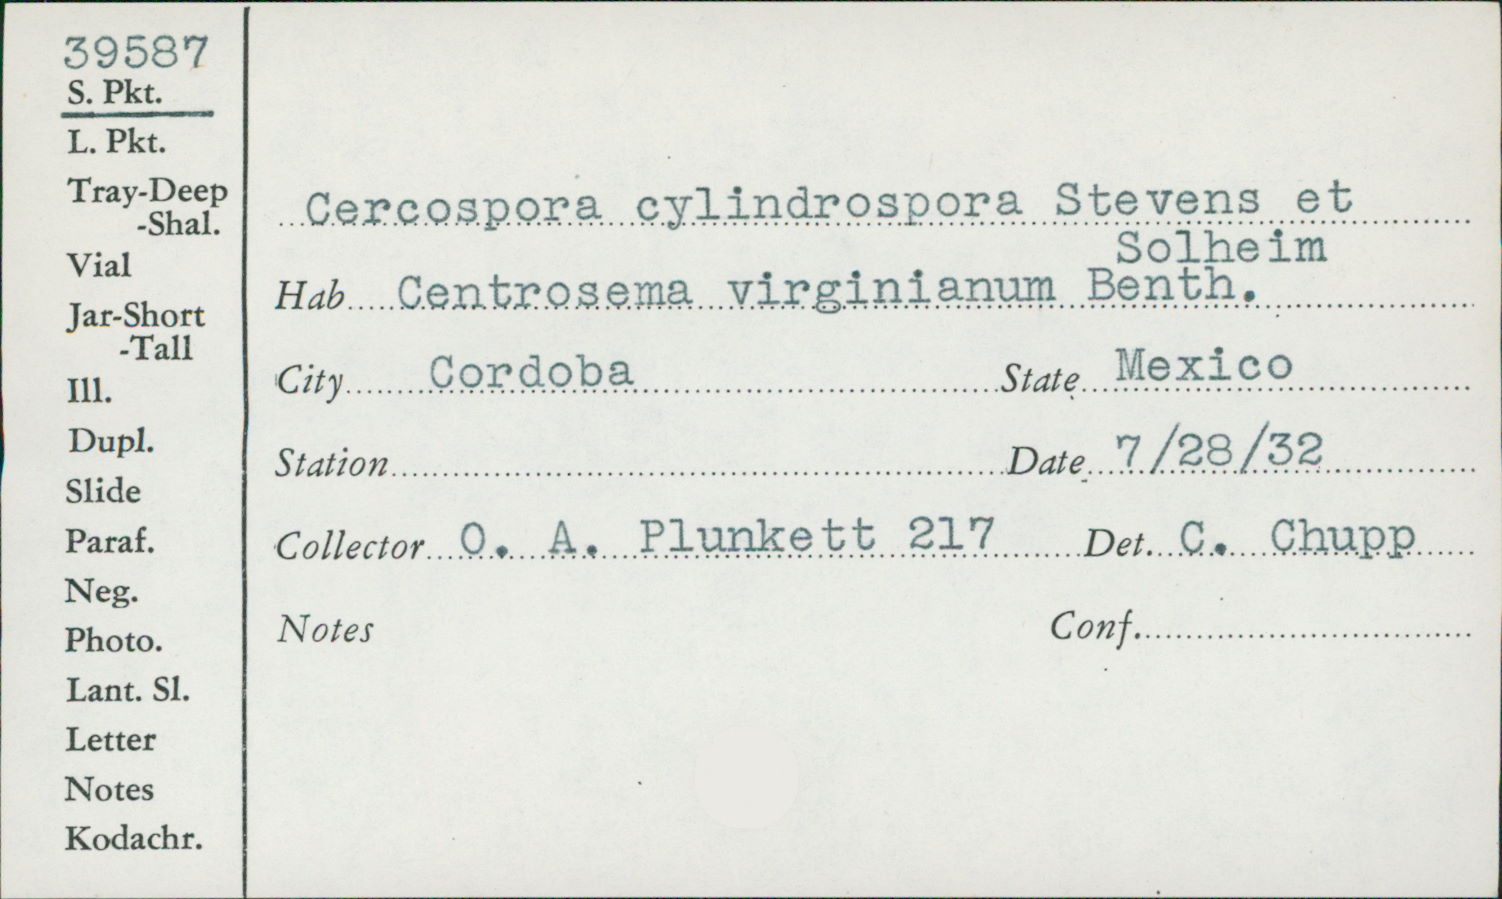 Cercospora cylindrospora image